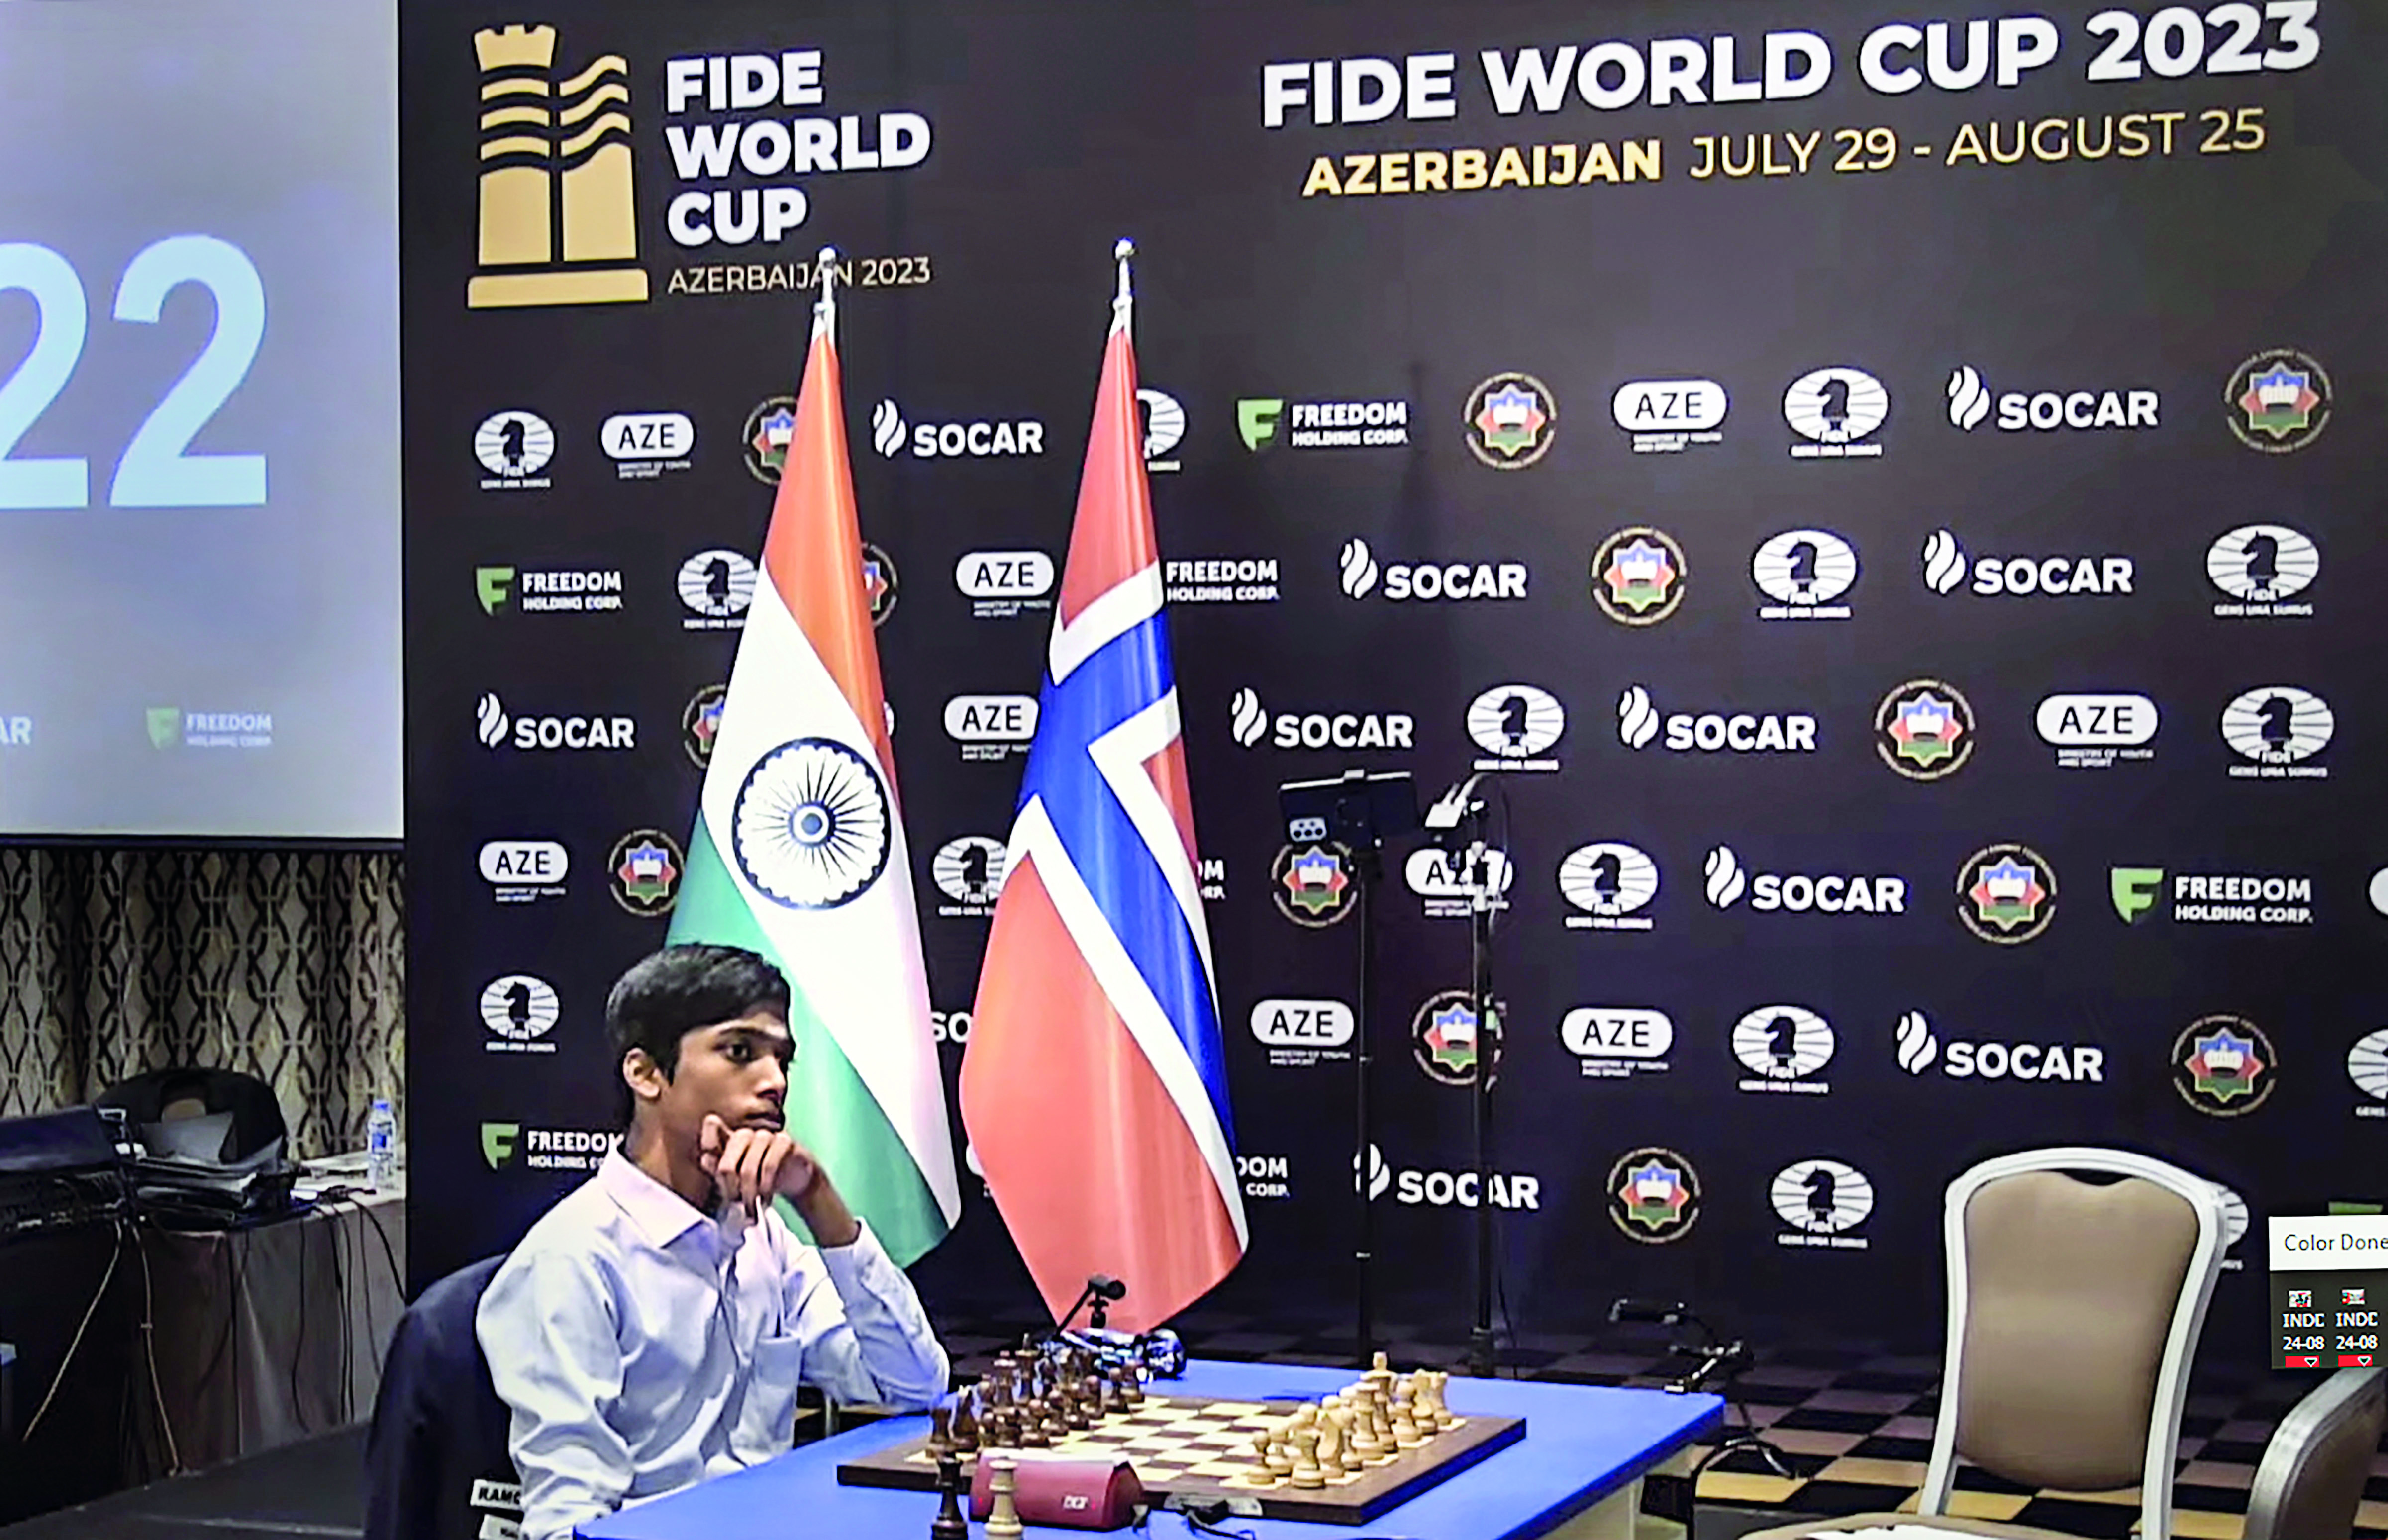 FIDE World Cup 2023: Magnus Carlsen wins maiden World Cup